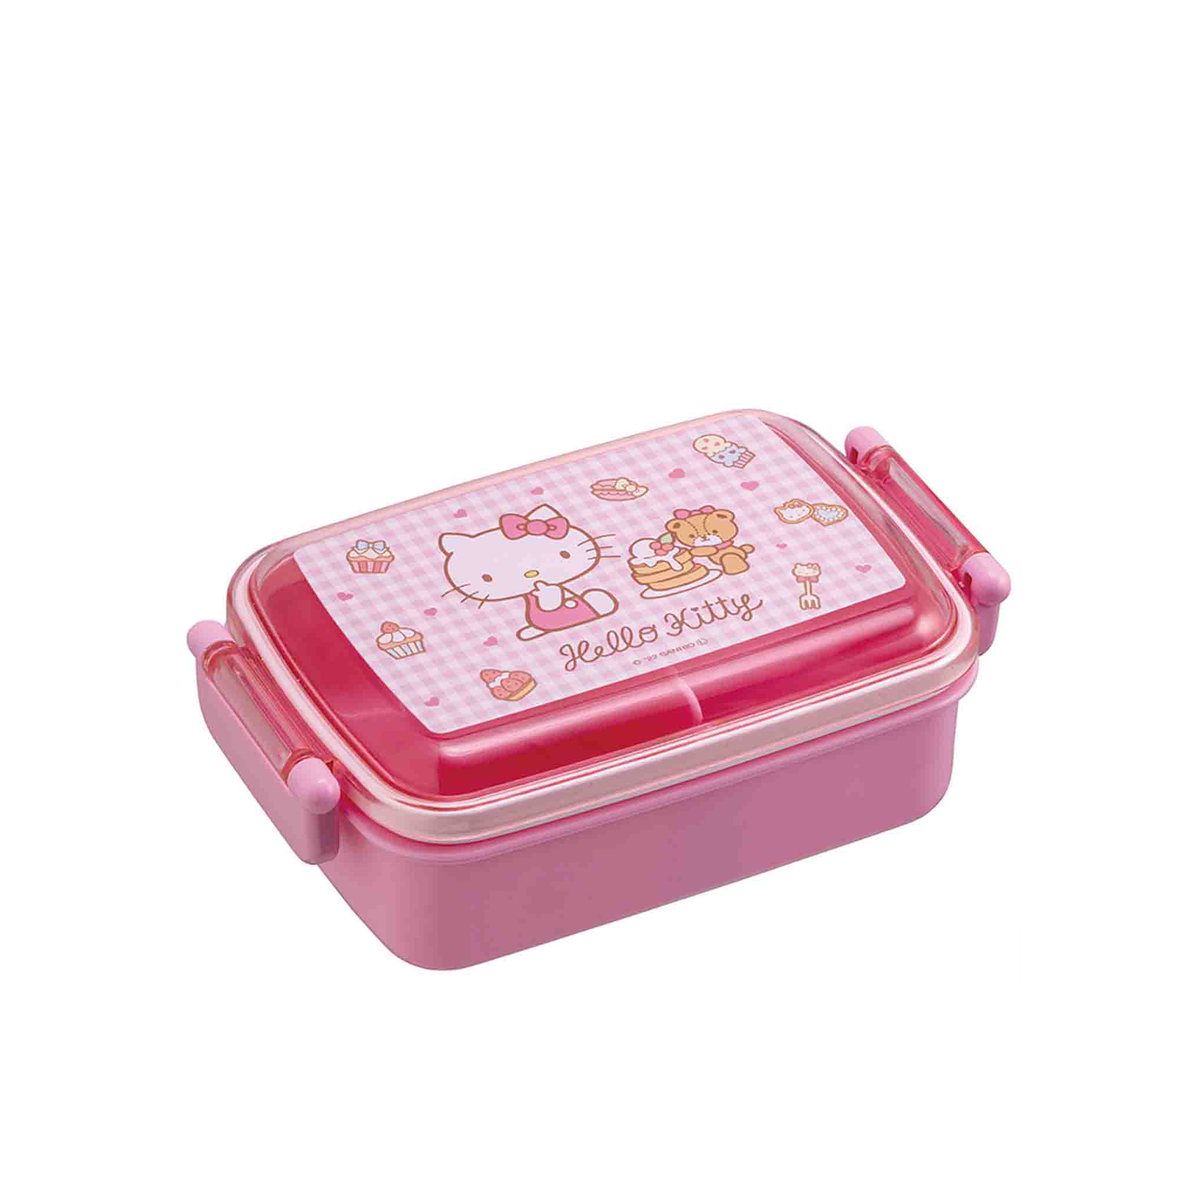  Sanrio Hello Kitty Aggretsuko Snack Box Japanese